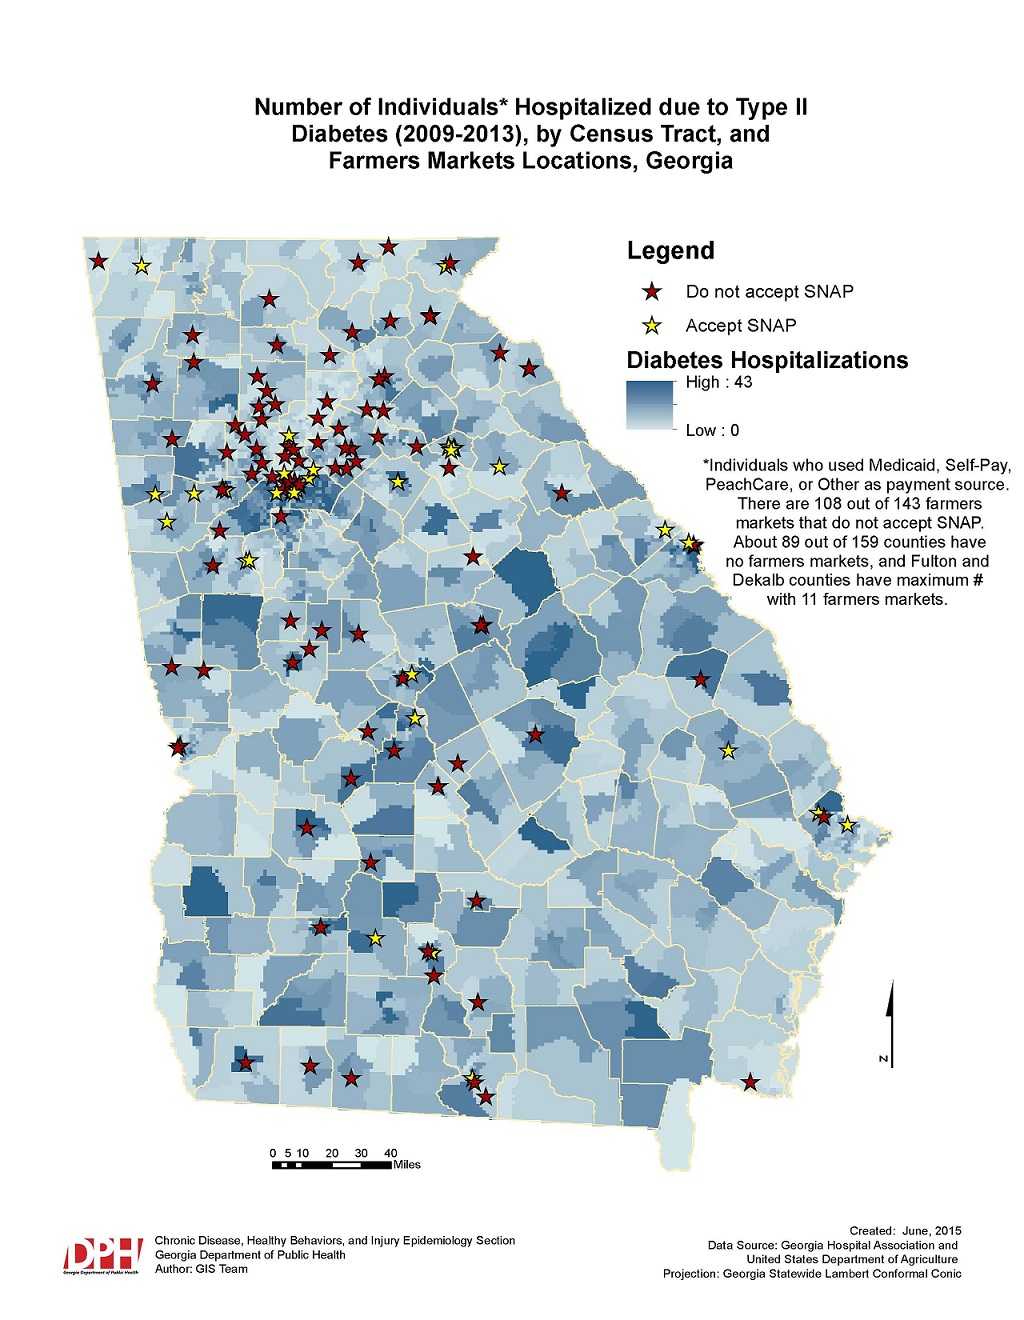 Diabetes Hospitalizations and Access to Farmer’s Markets, Georgia